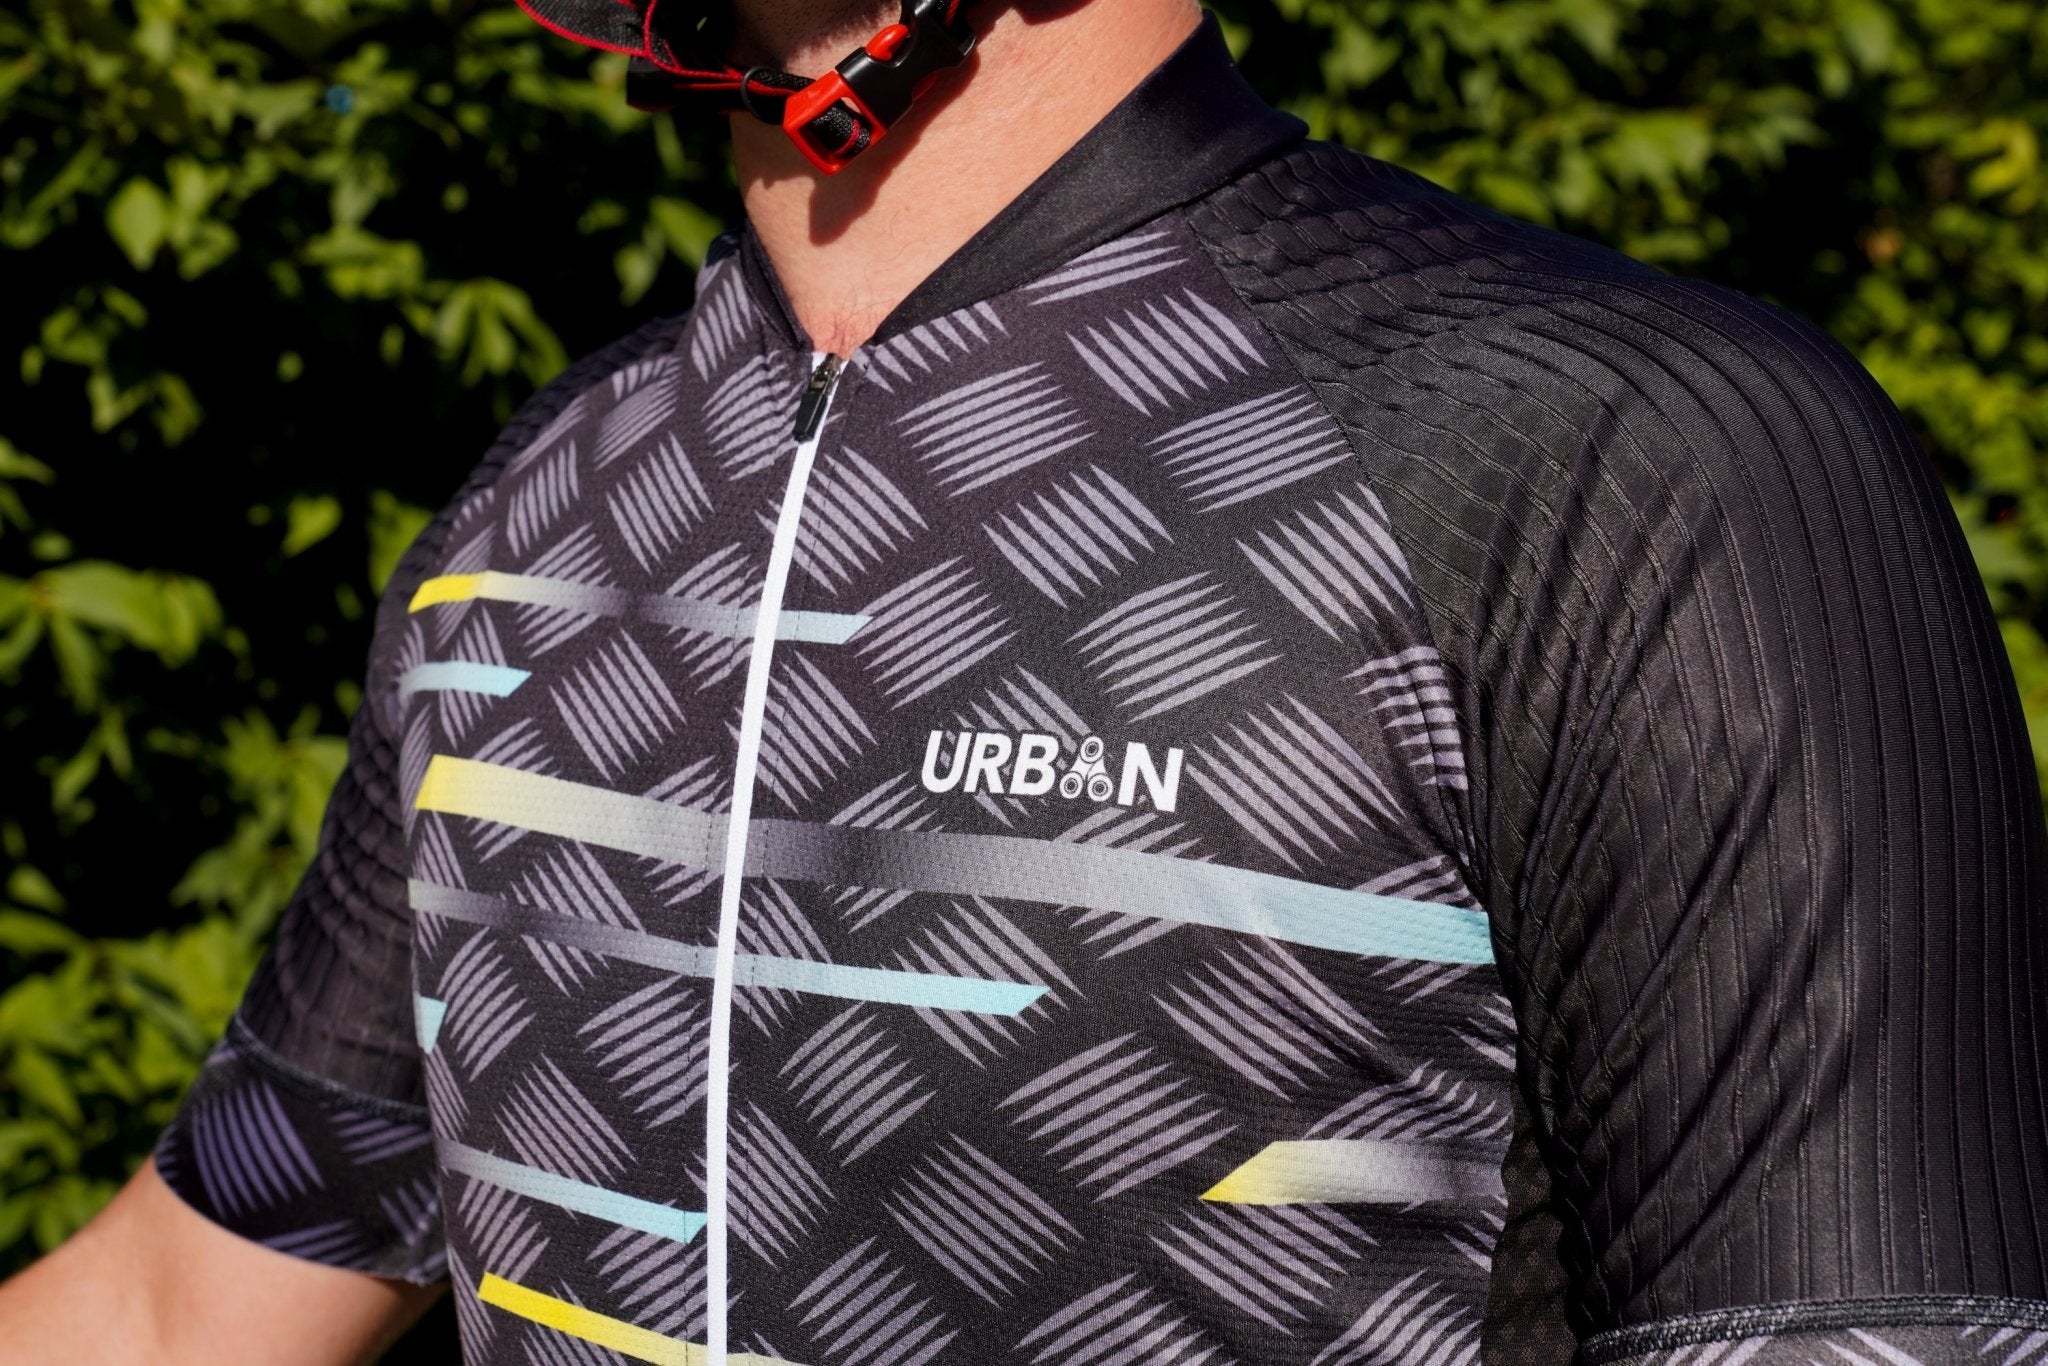 Men’s Pro Urban Cycling Carbide Short Sleeve Jerseys / Bib Shorts